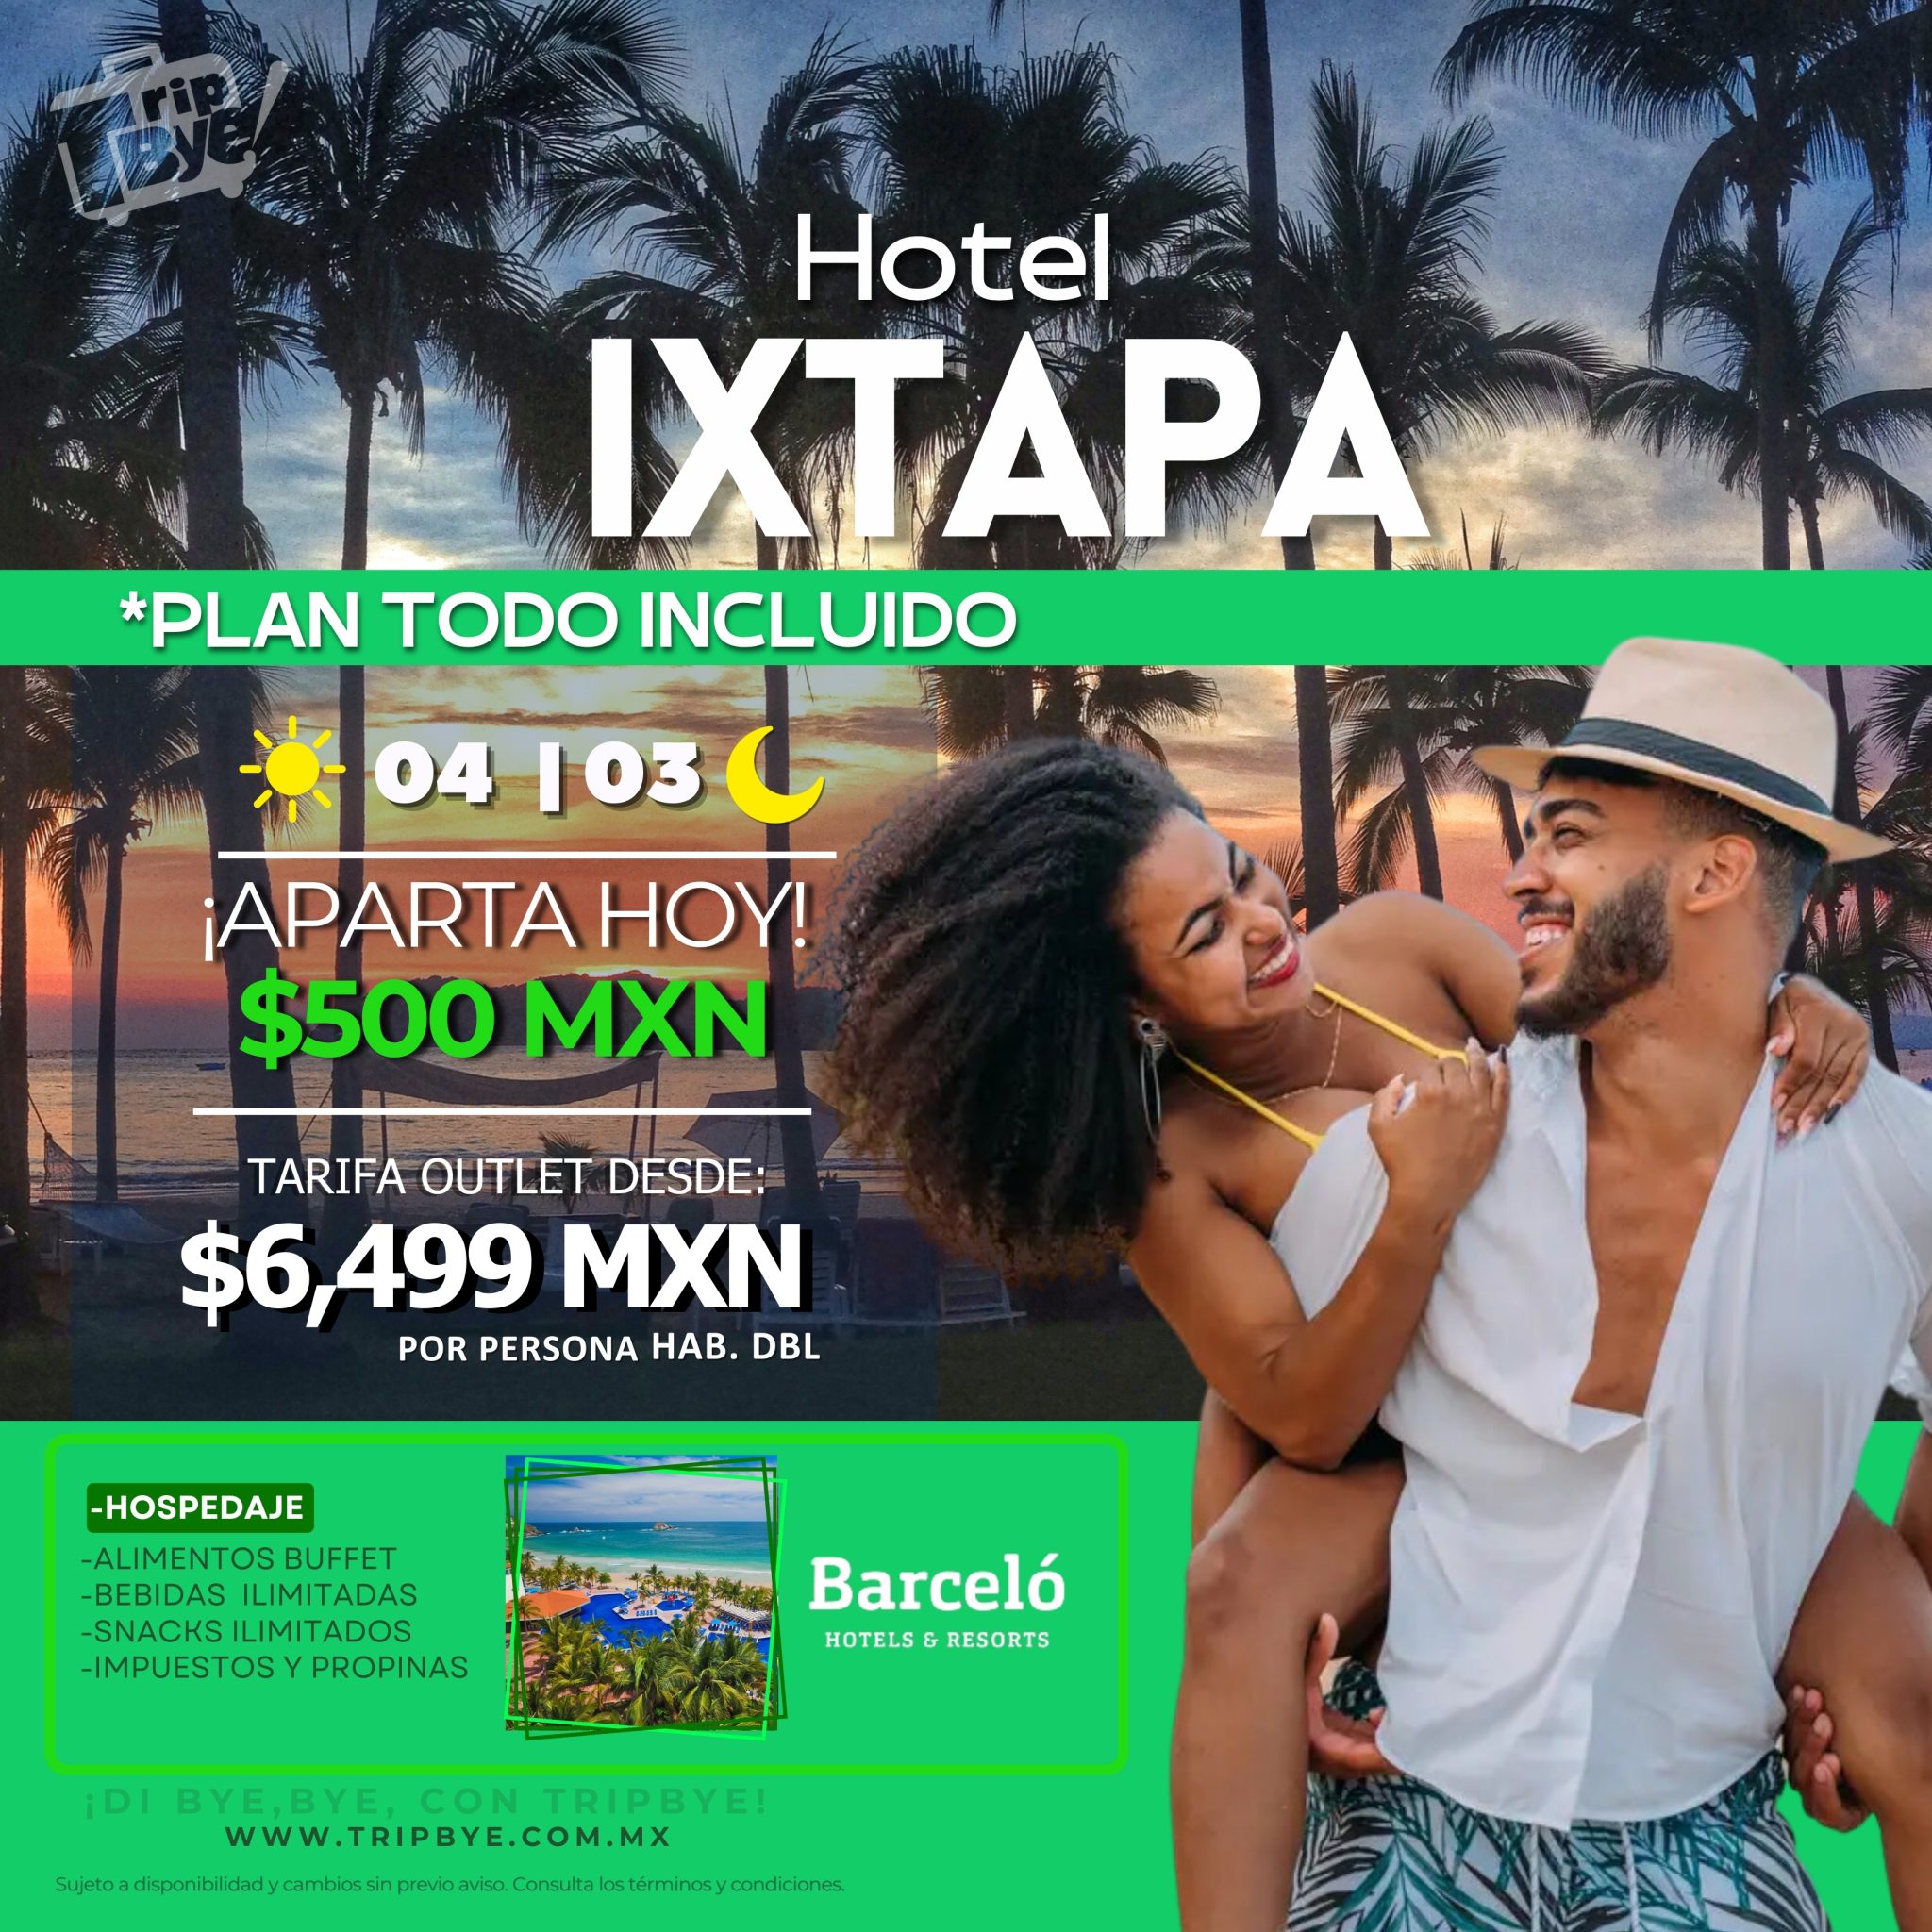 Hotel Barceló Ixtapa